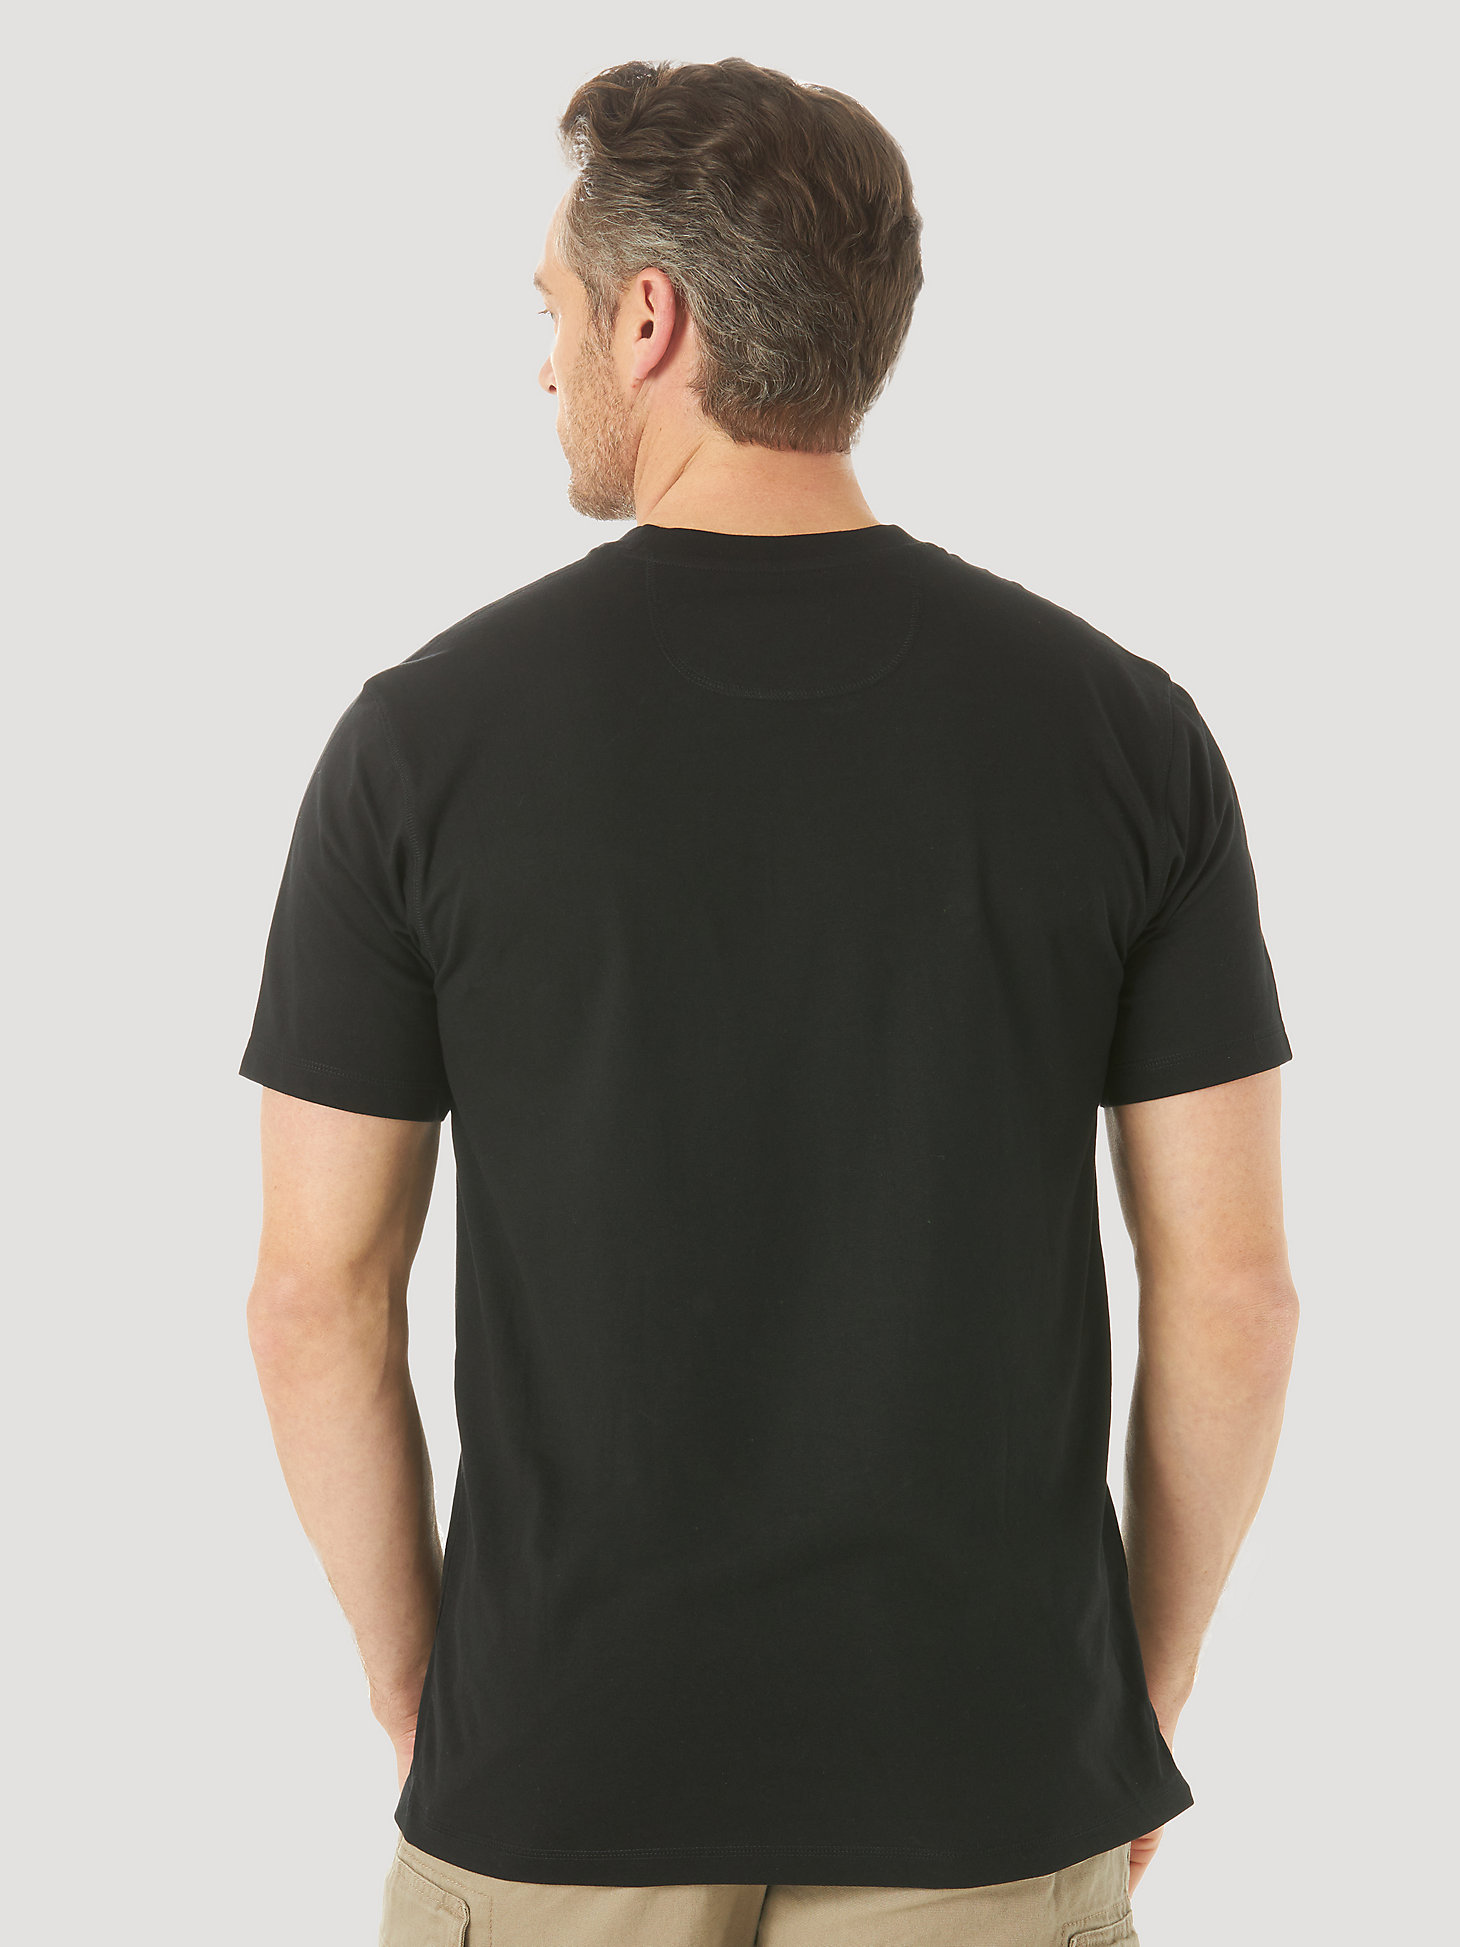 Wrangler® RIGGS Workwear® Short Sleeve 1 Pocket Performance T-Shirt in Black alternative view 1